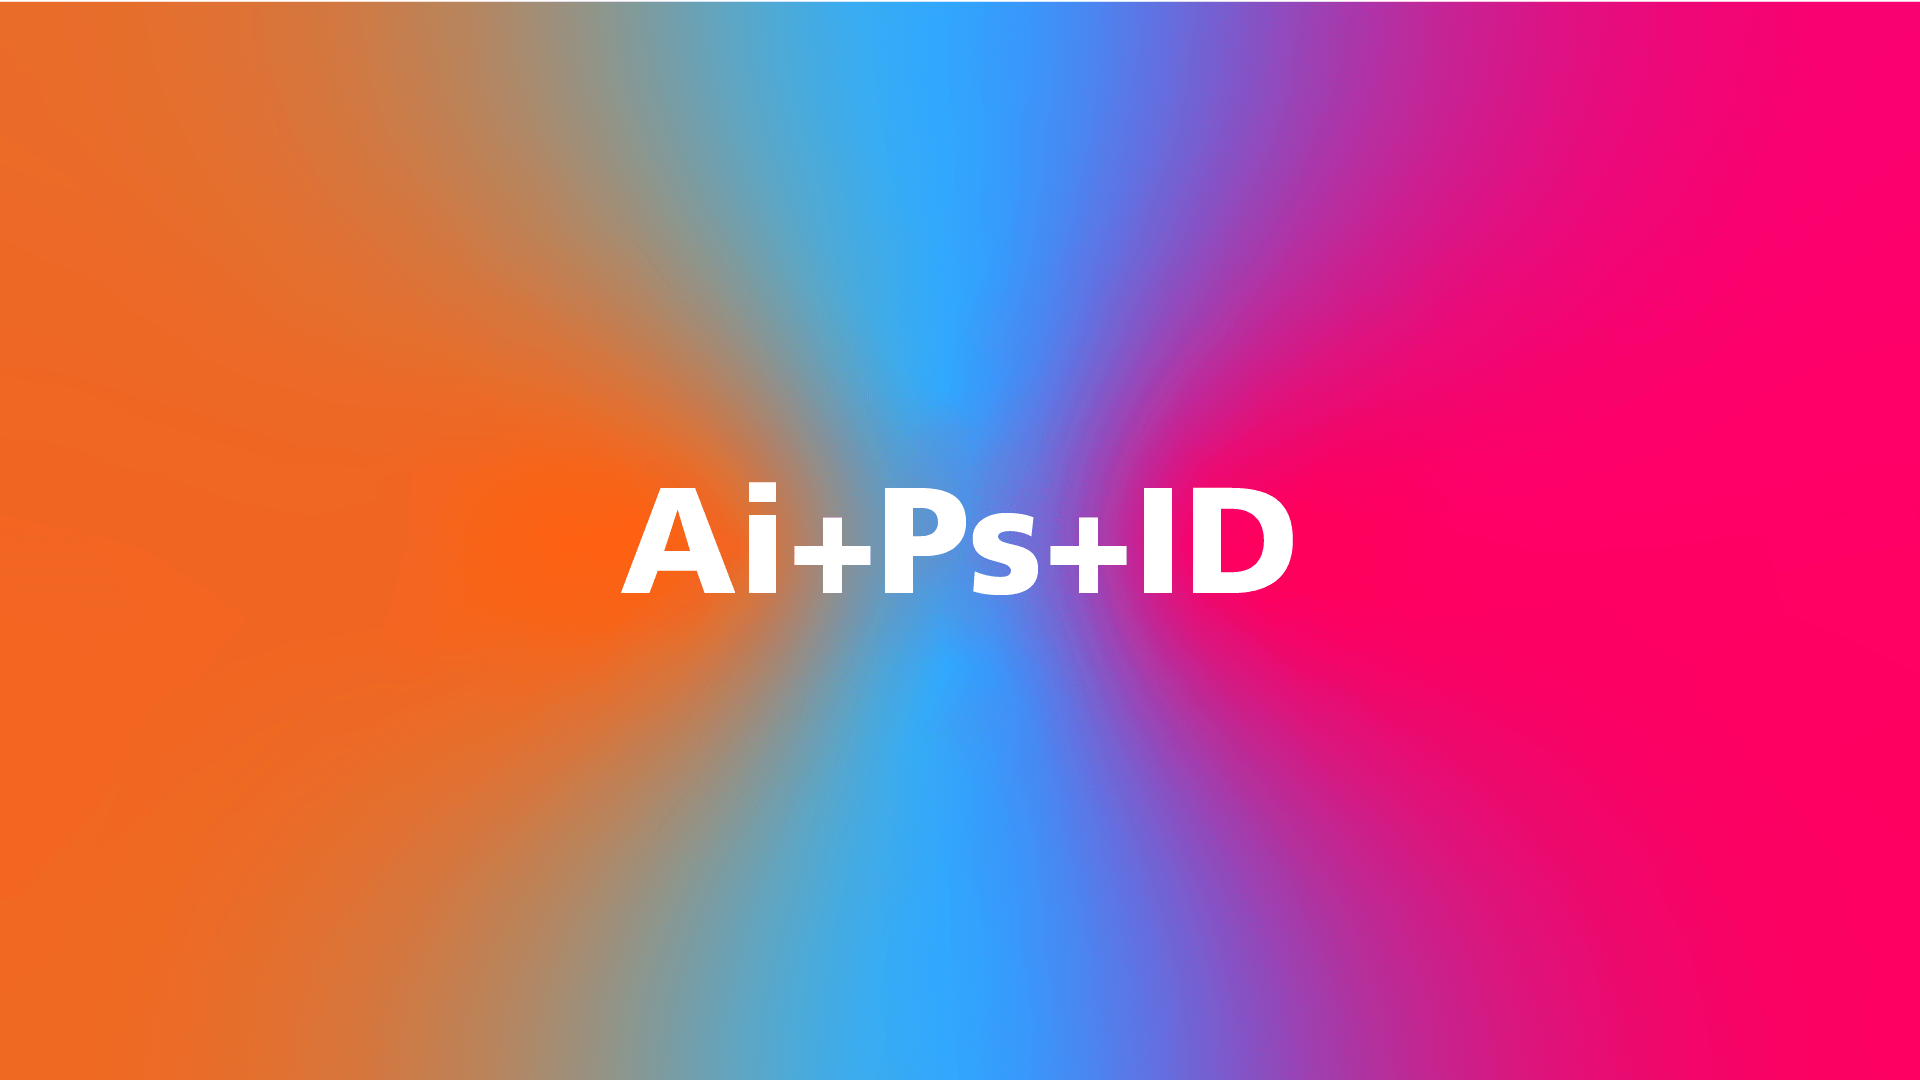 Bundle AI+PS+ID